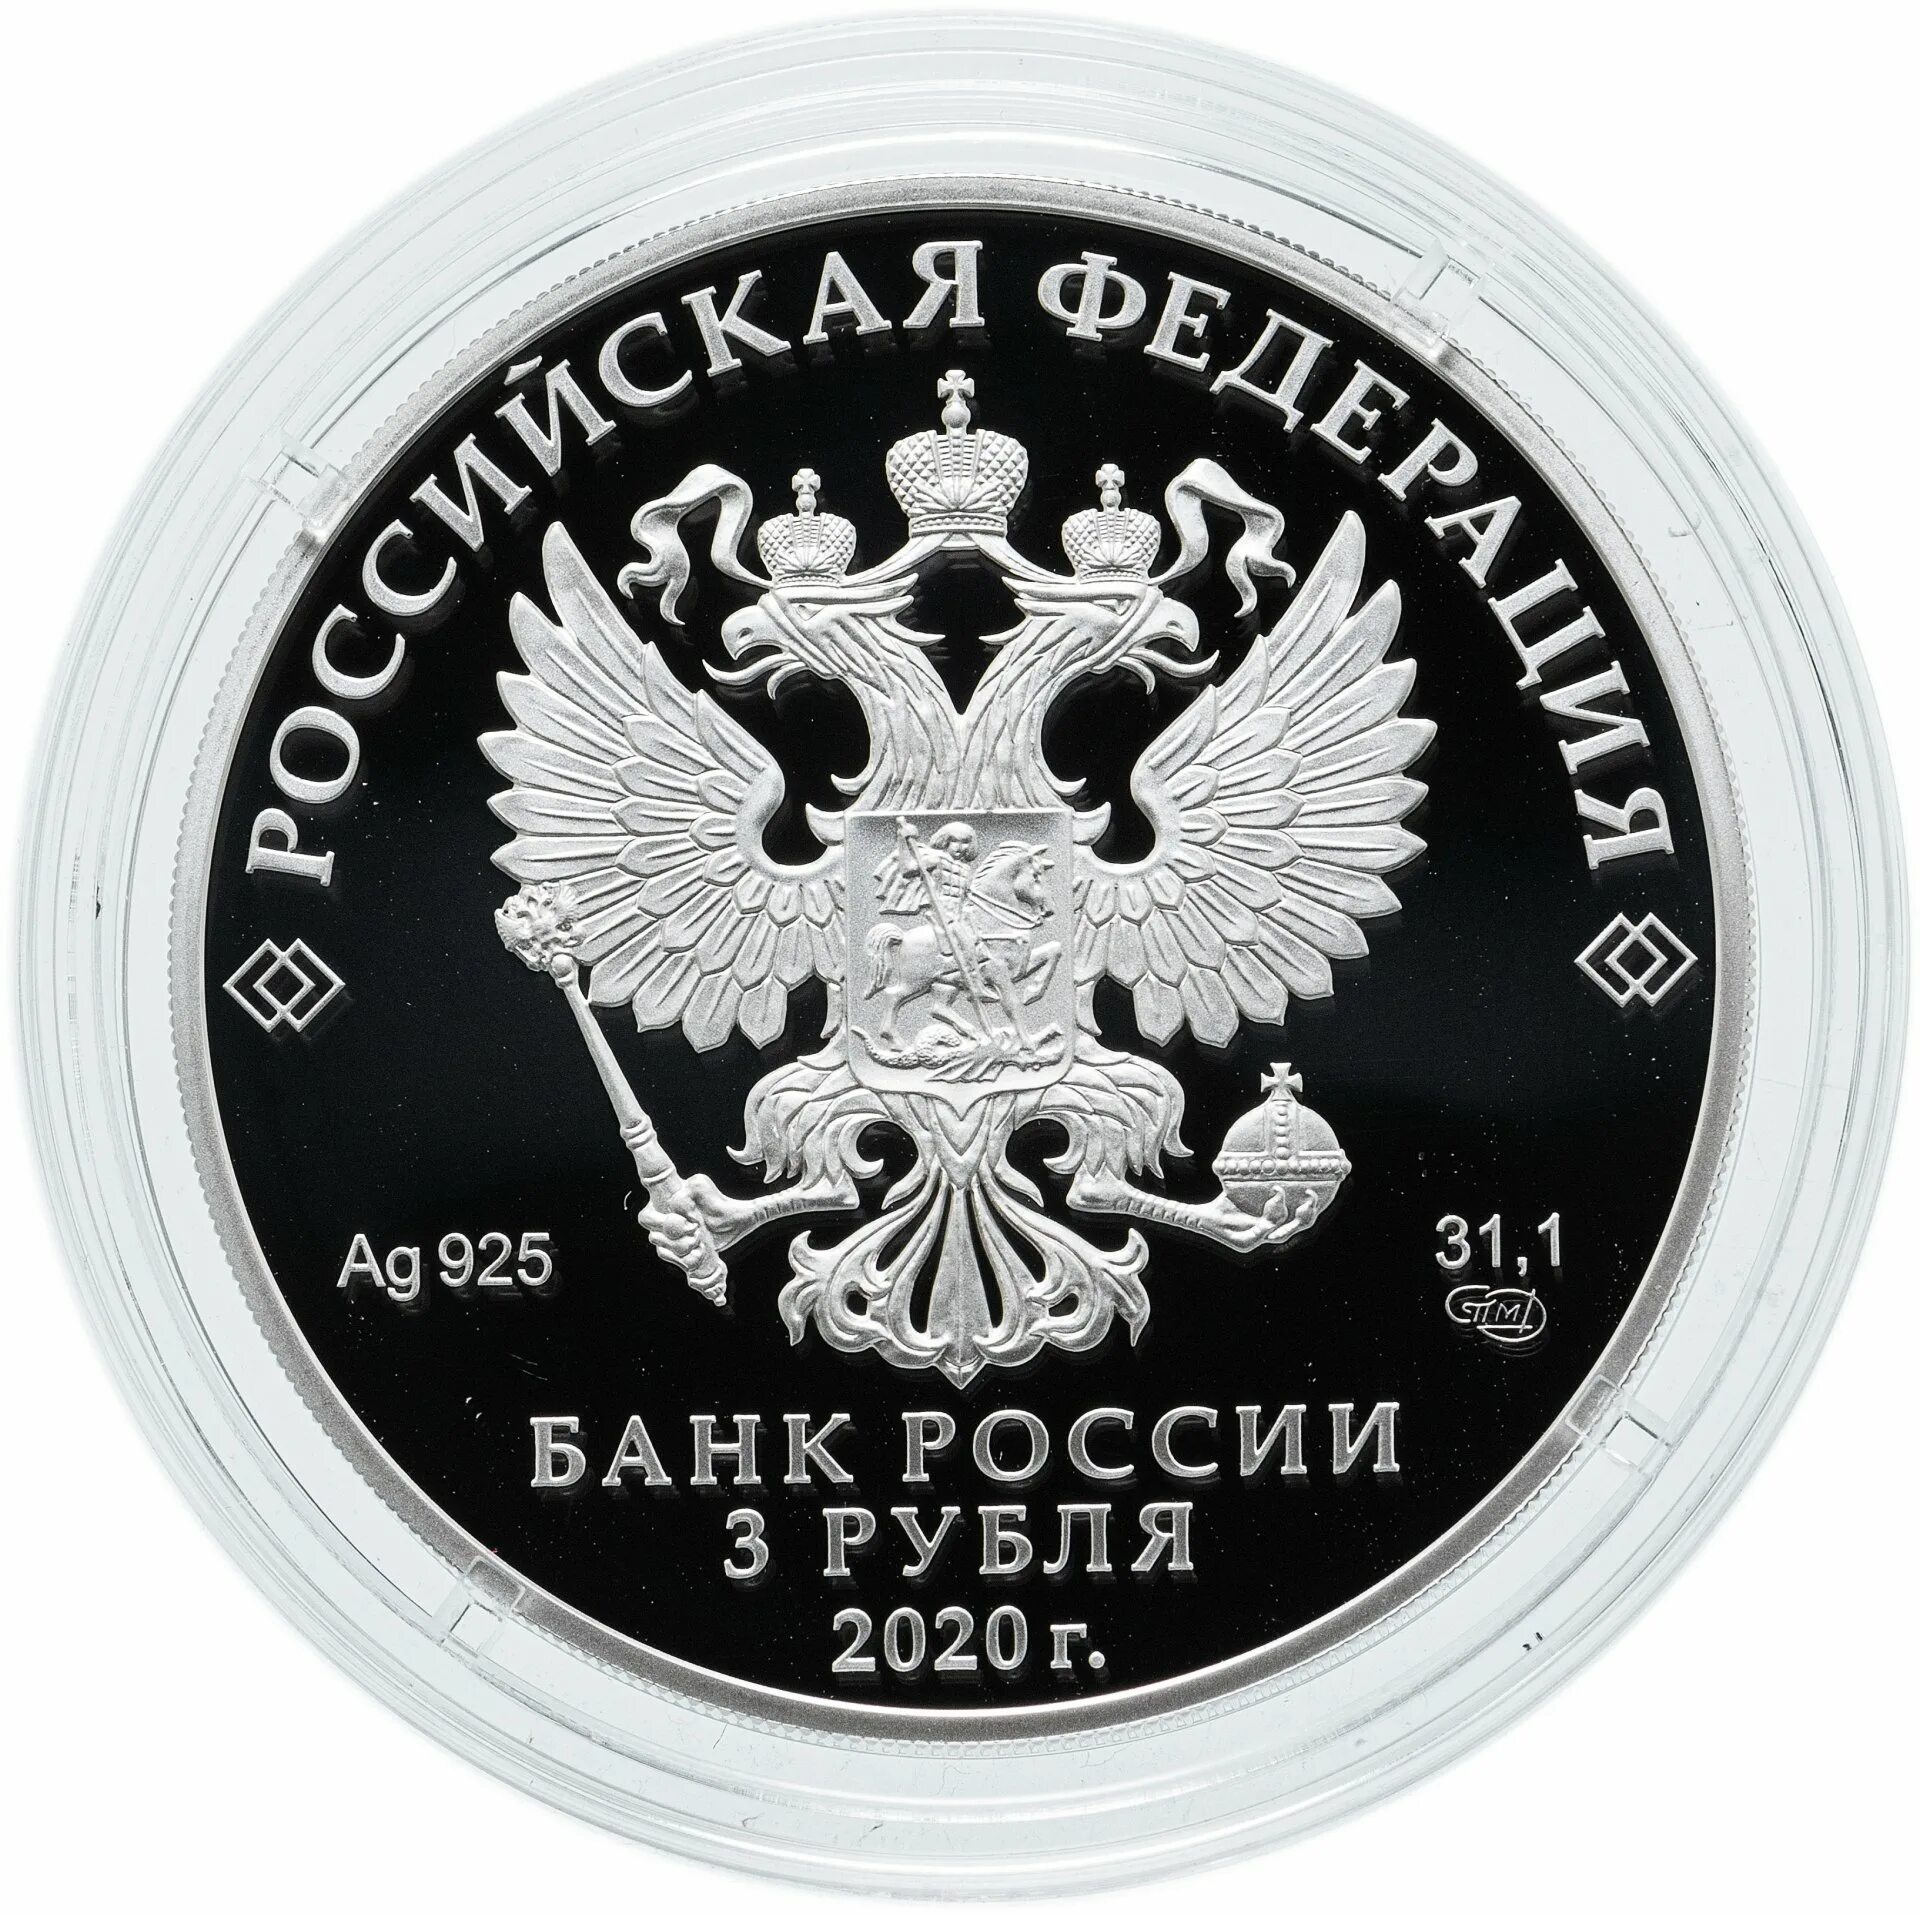 Монета РФ 1 рубль 2020 года. 3 Рубля 2016. Монета РФ 1 рубль 2017 года. Банк России 2 рубля 2020. Россия серебро сегодня